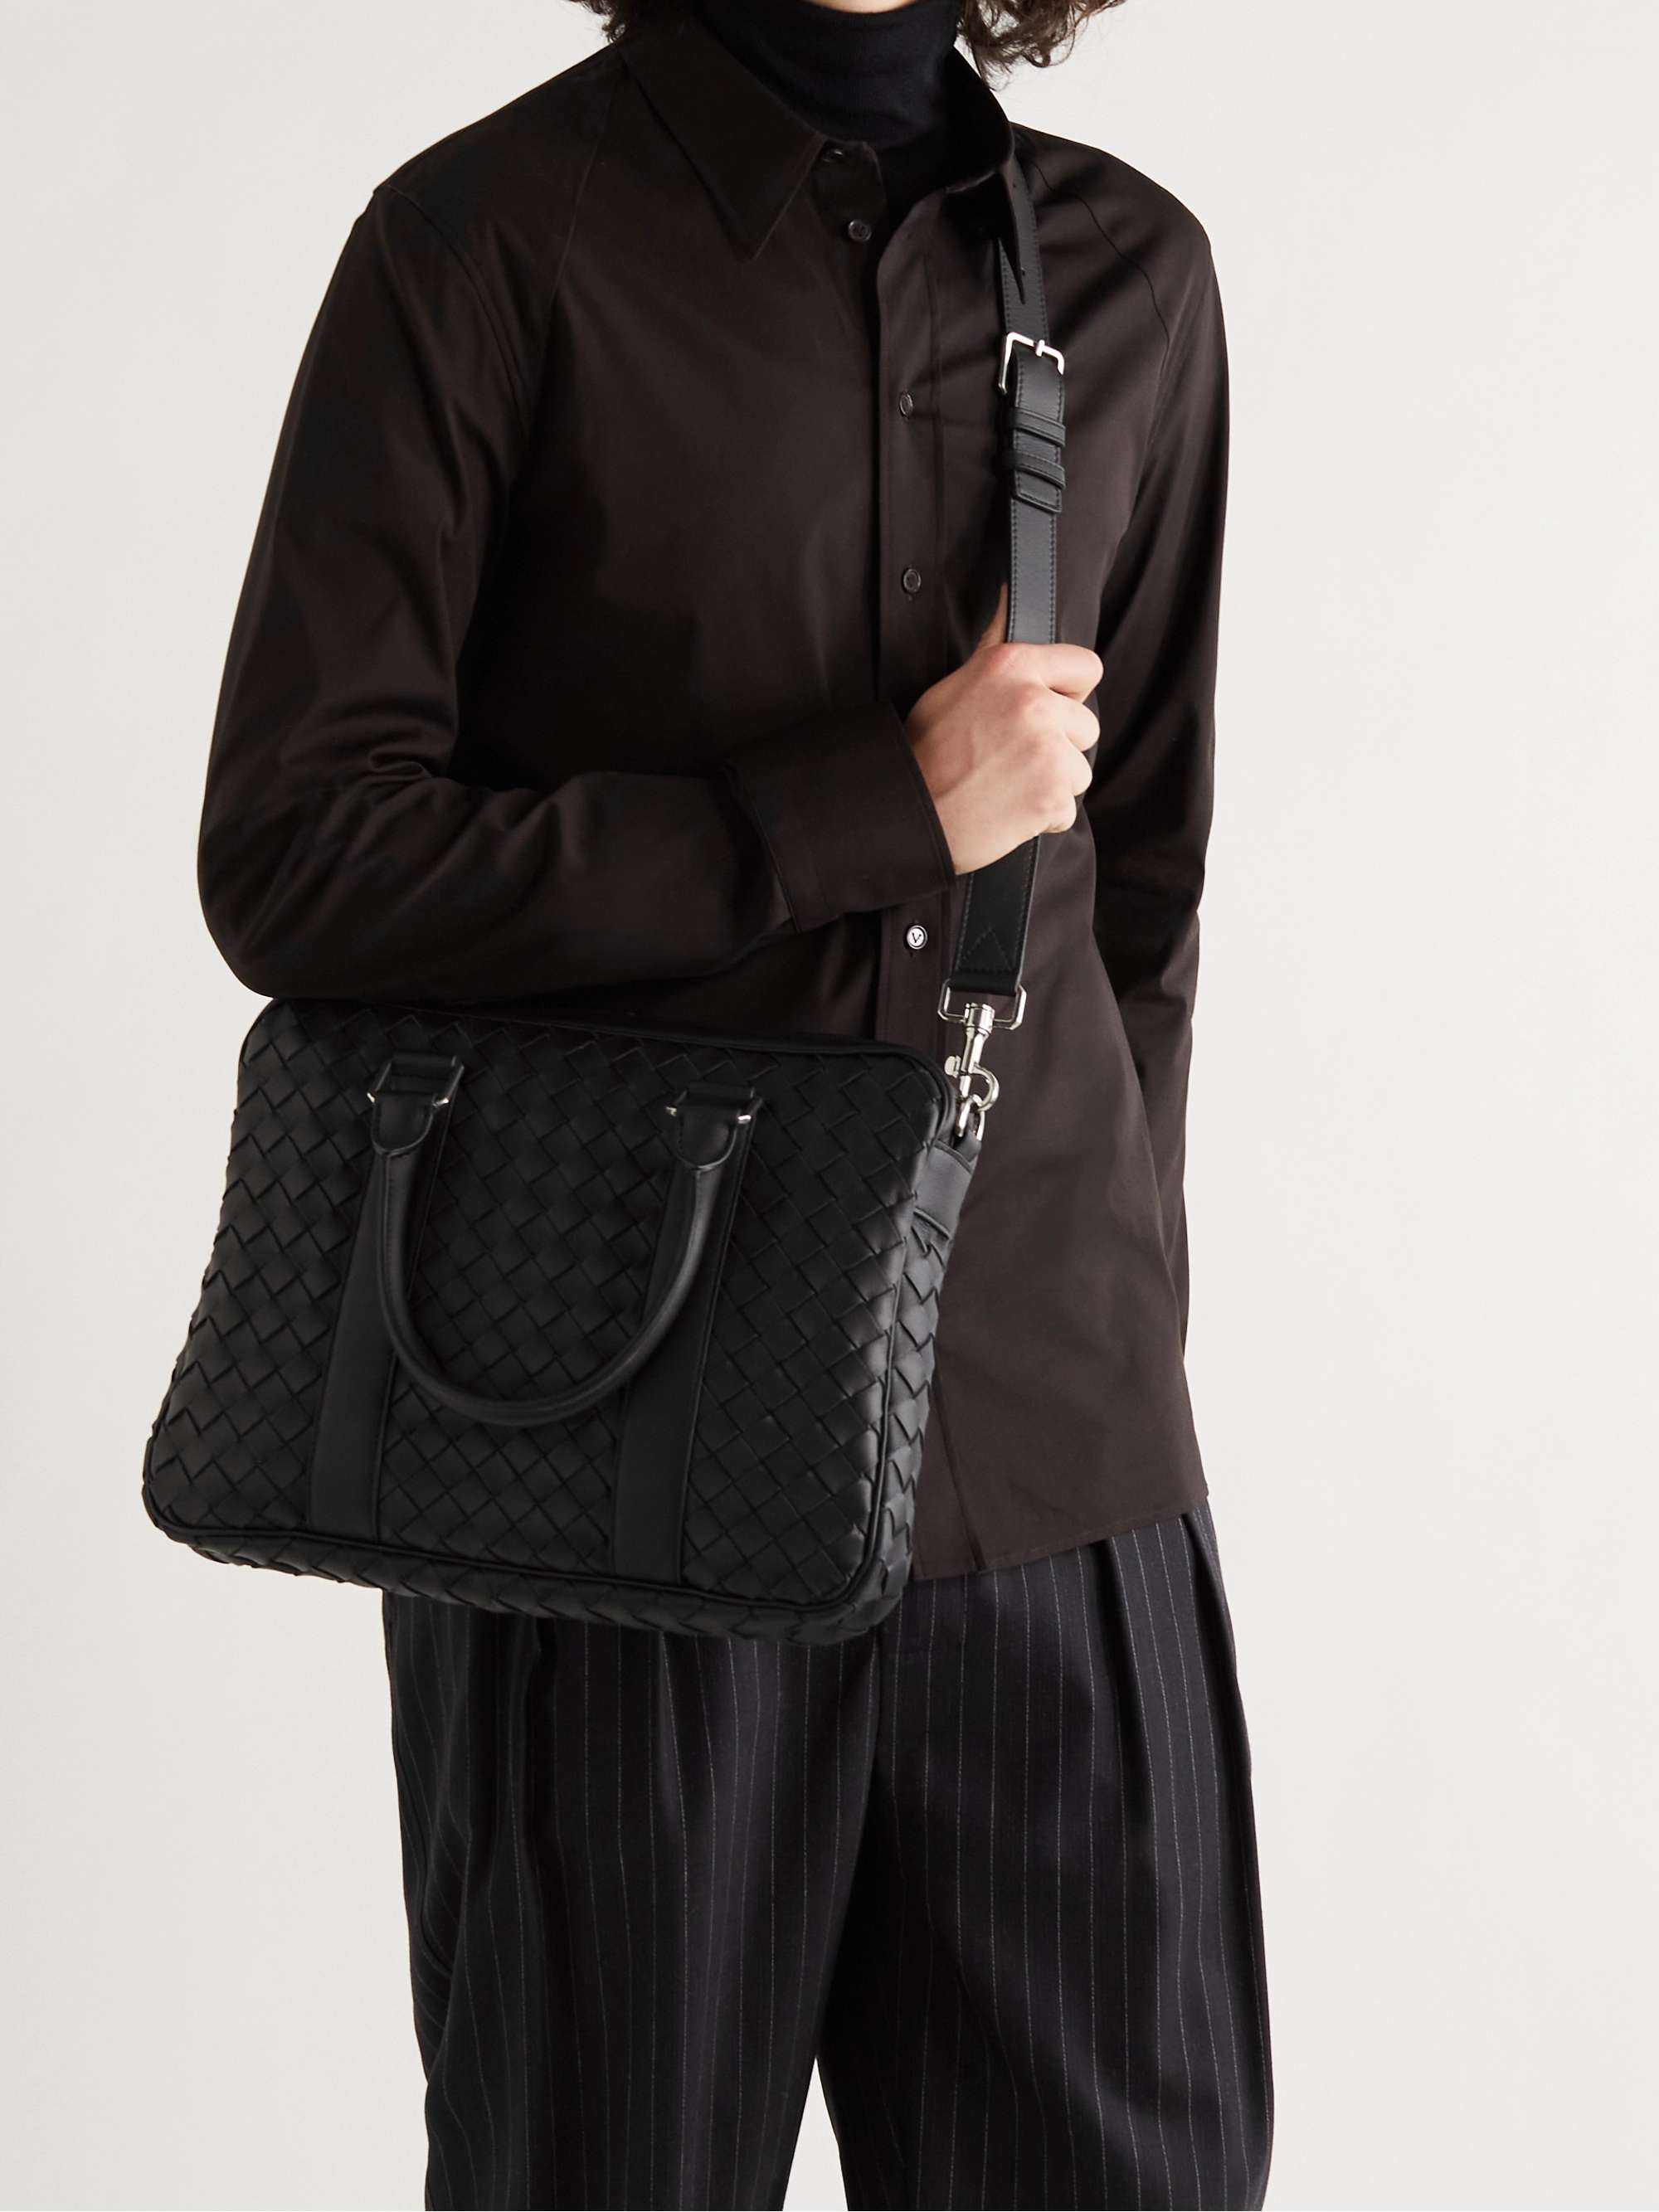 BOTTEGA VENETA Intrecciato Leather Briefcase for Men | MR PORTER